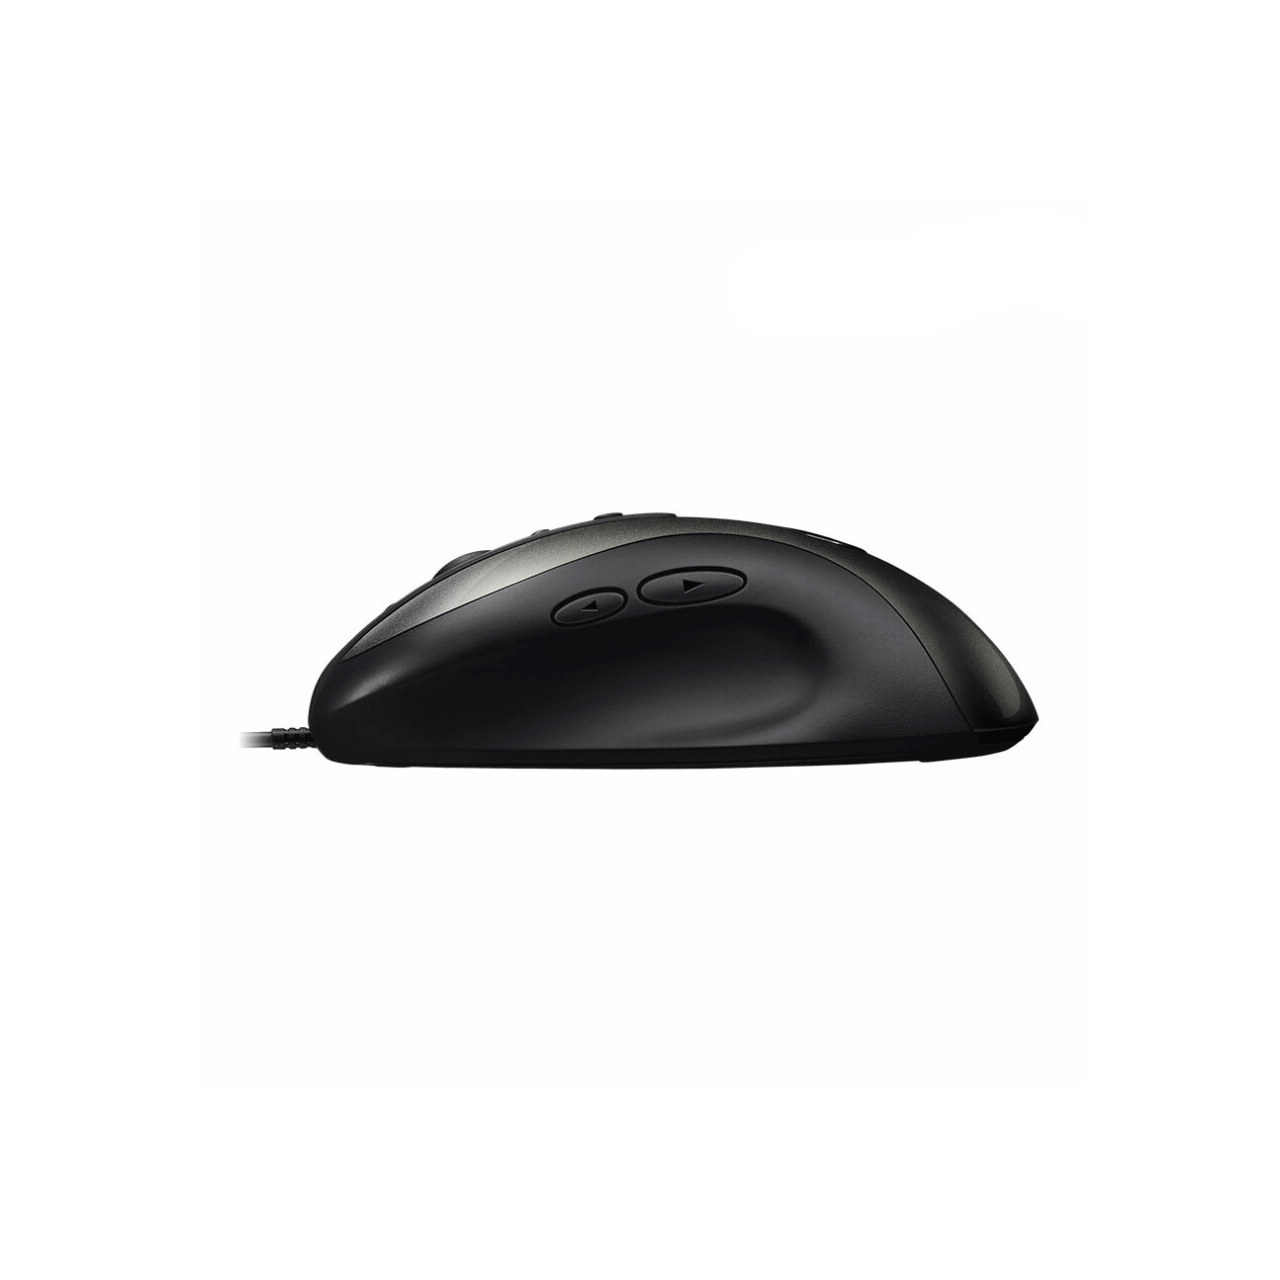 Logitech--MX518-HERO-Gaming-Mouse